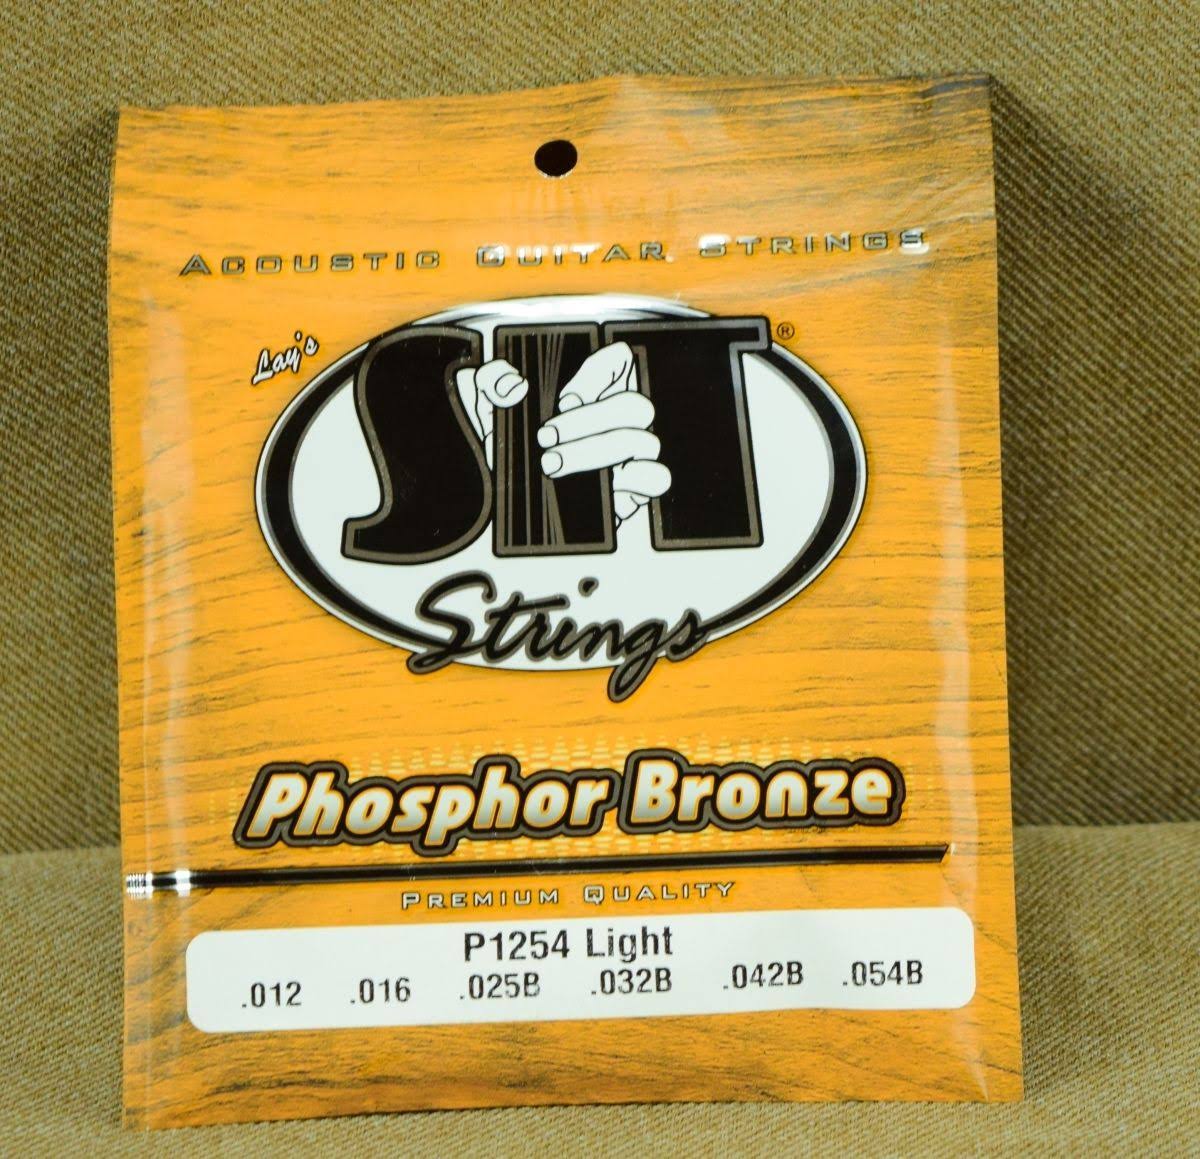 SIT Acoustic Guitar Strings - Phosphor Bronze, Light